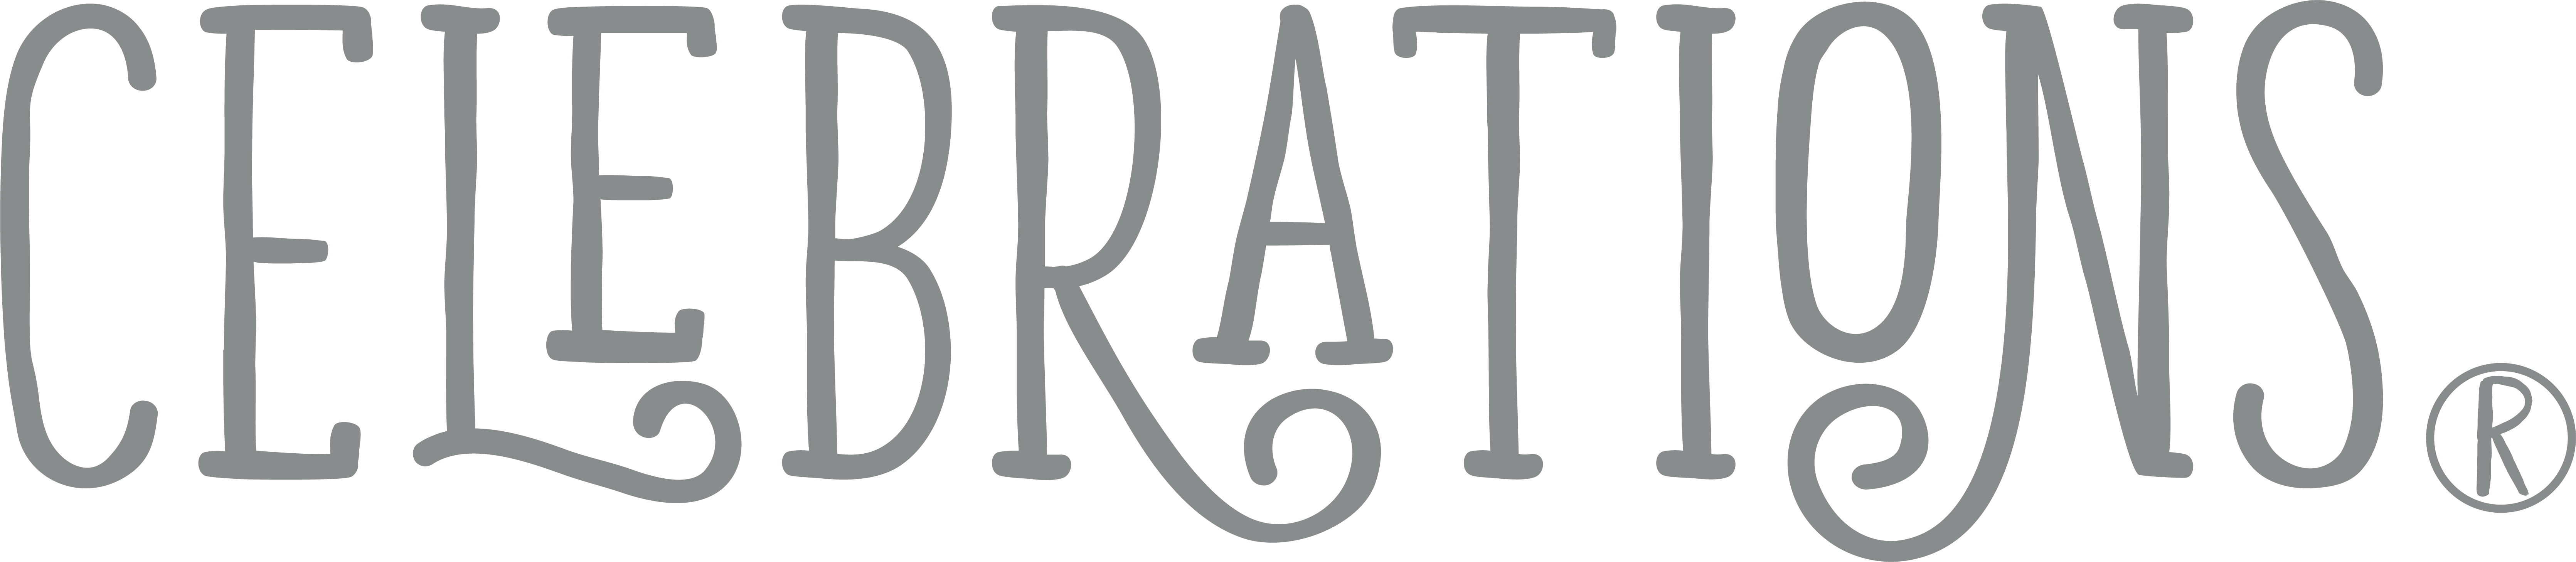 celebrations(r) logo.png